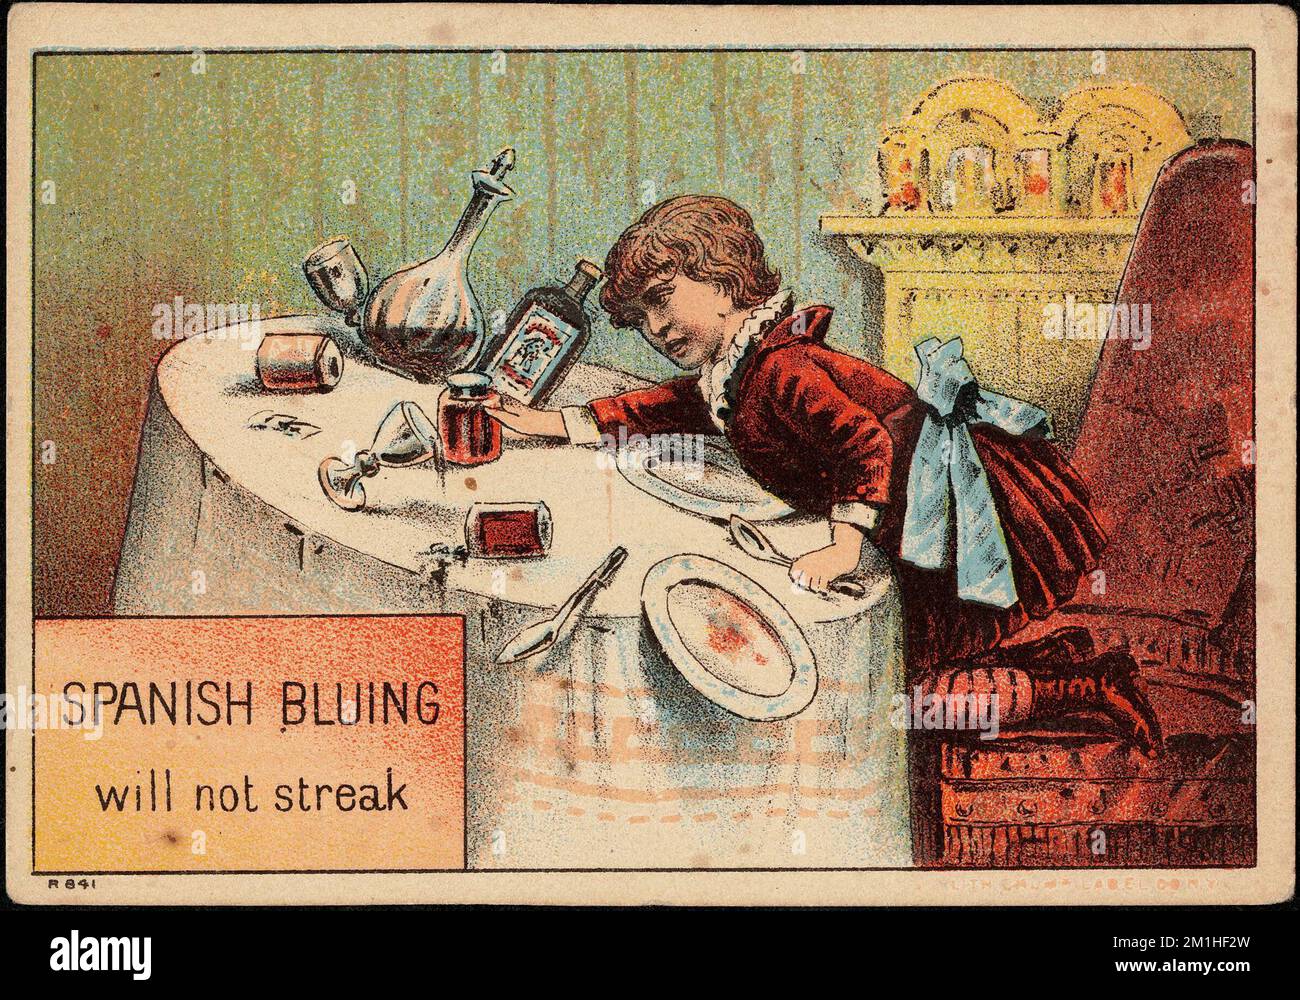 https://c8.alamy.com/comp/2M1HF2W/spanish-bluing-will-not-streak-girls-laundry-19th-century-american-trade-cards-2M1HF2W.jpg